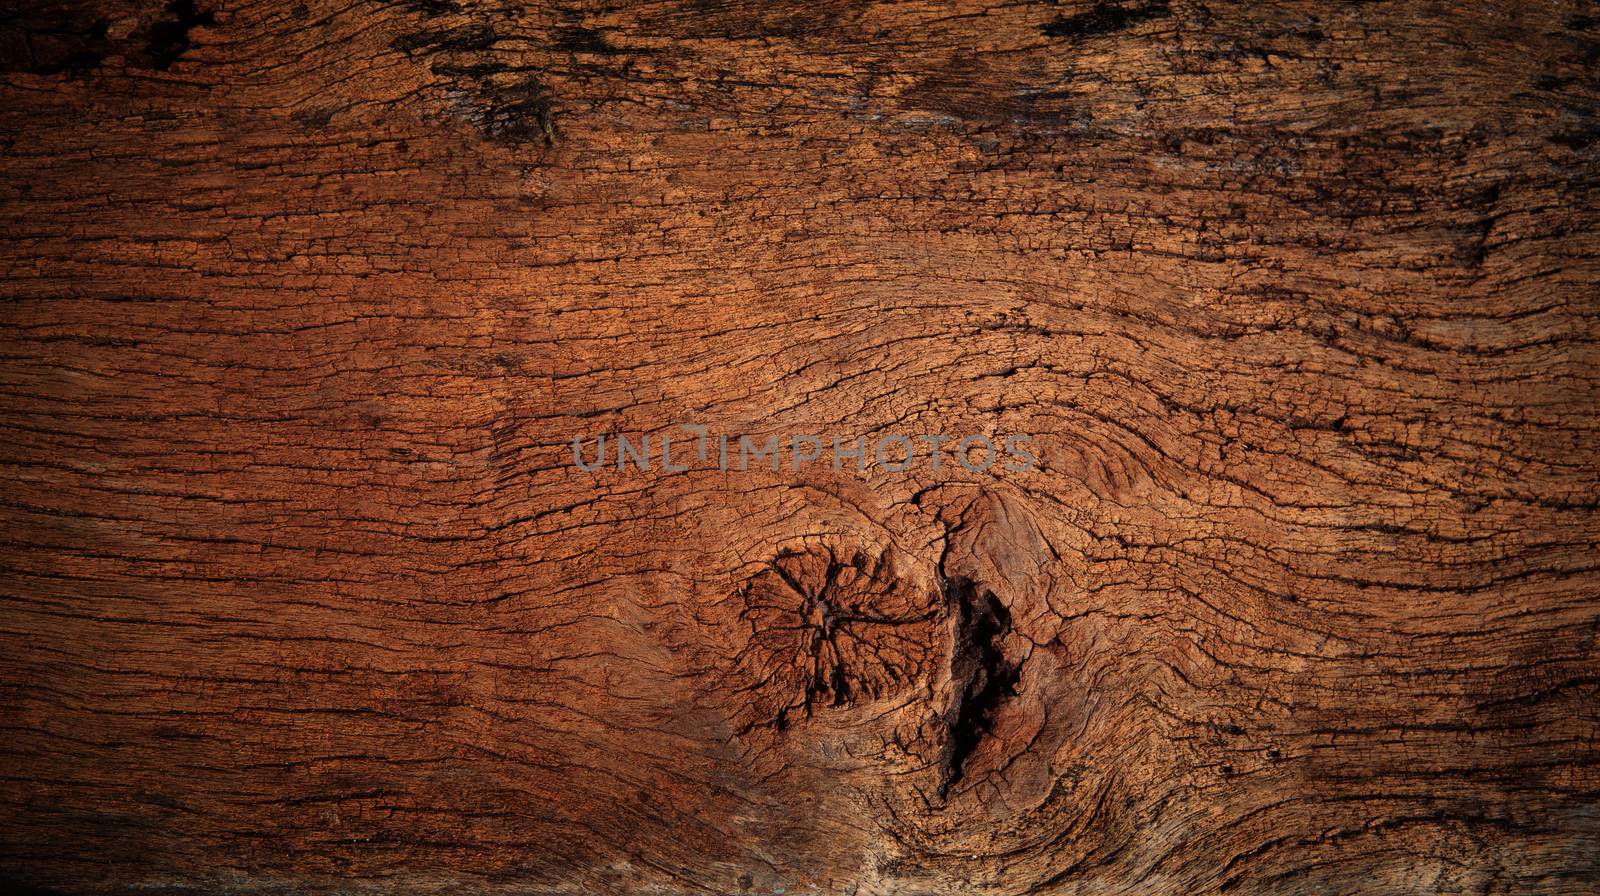 beautiful  nature  texture of bark wood use as natural backgroun by khunaspix